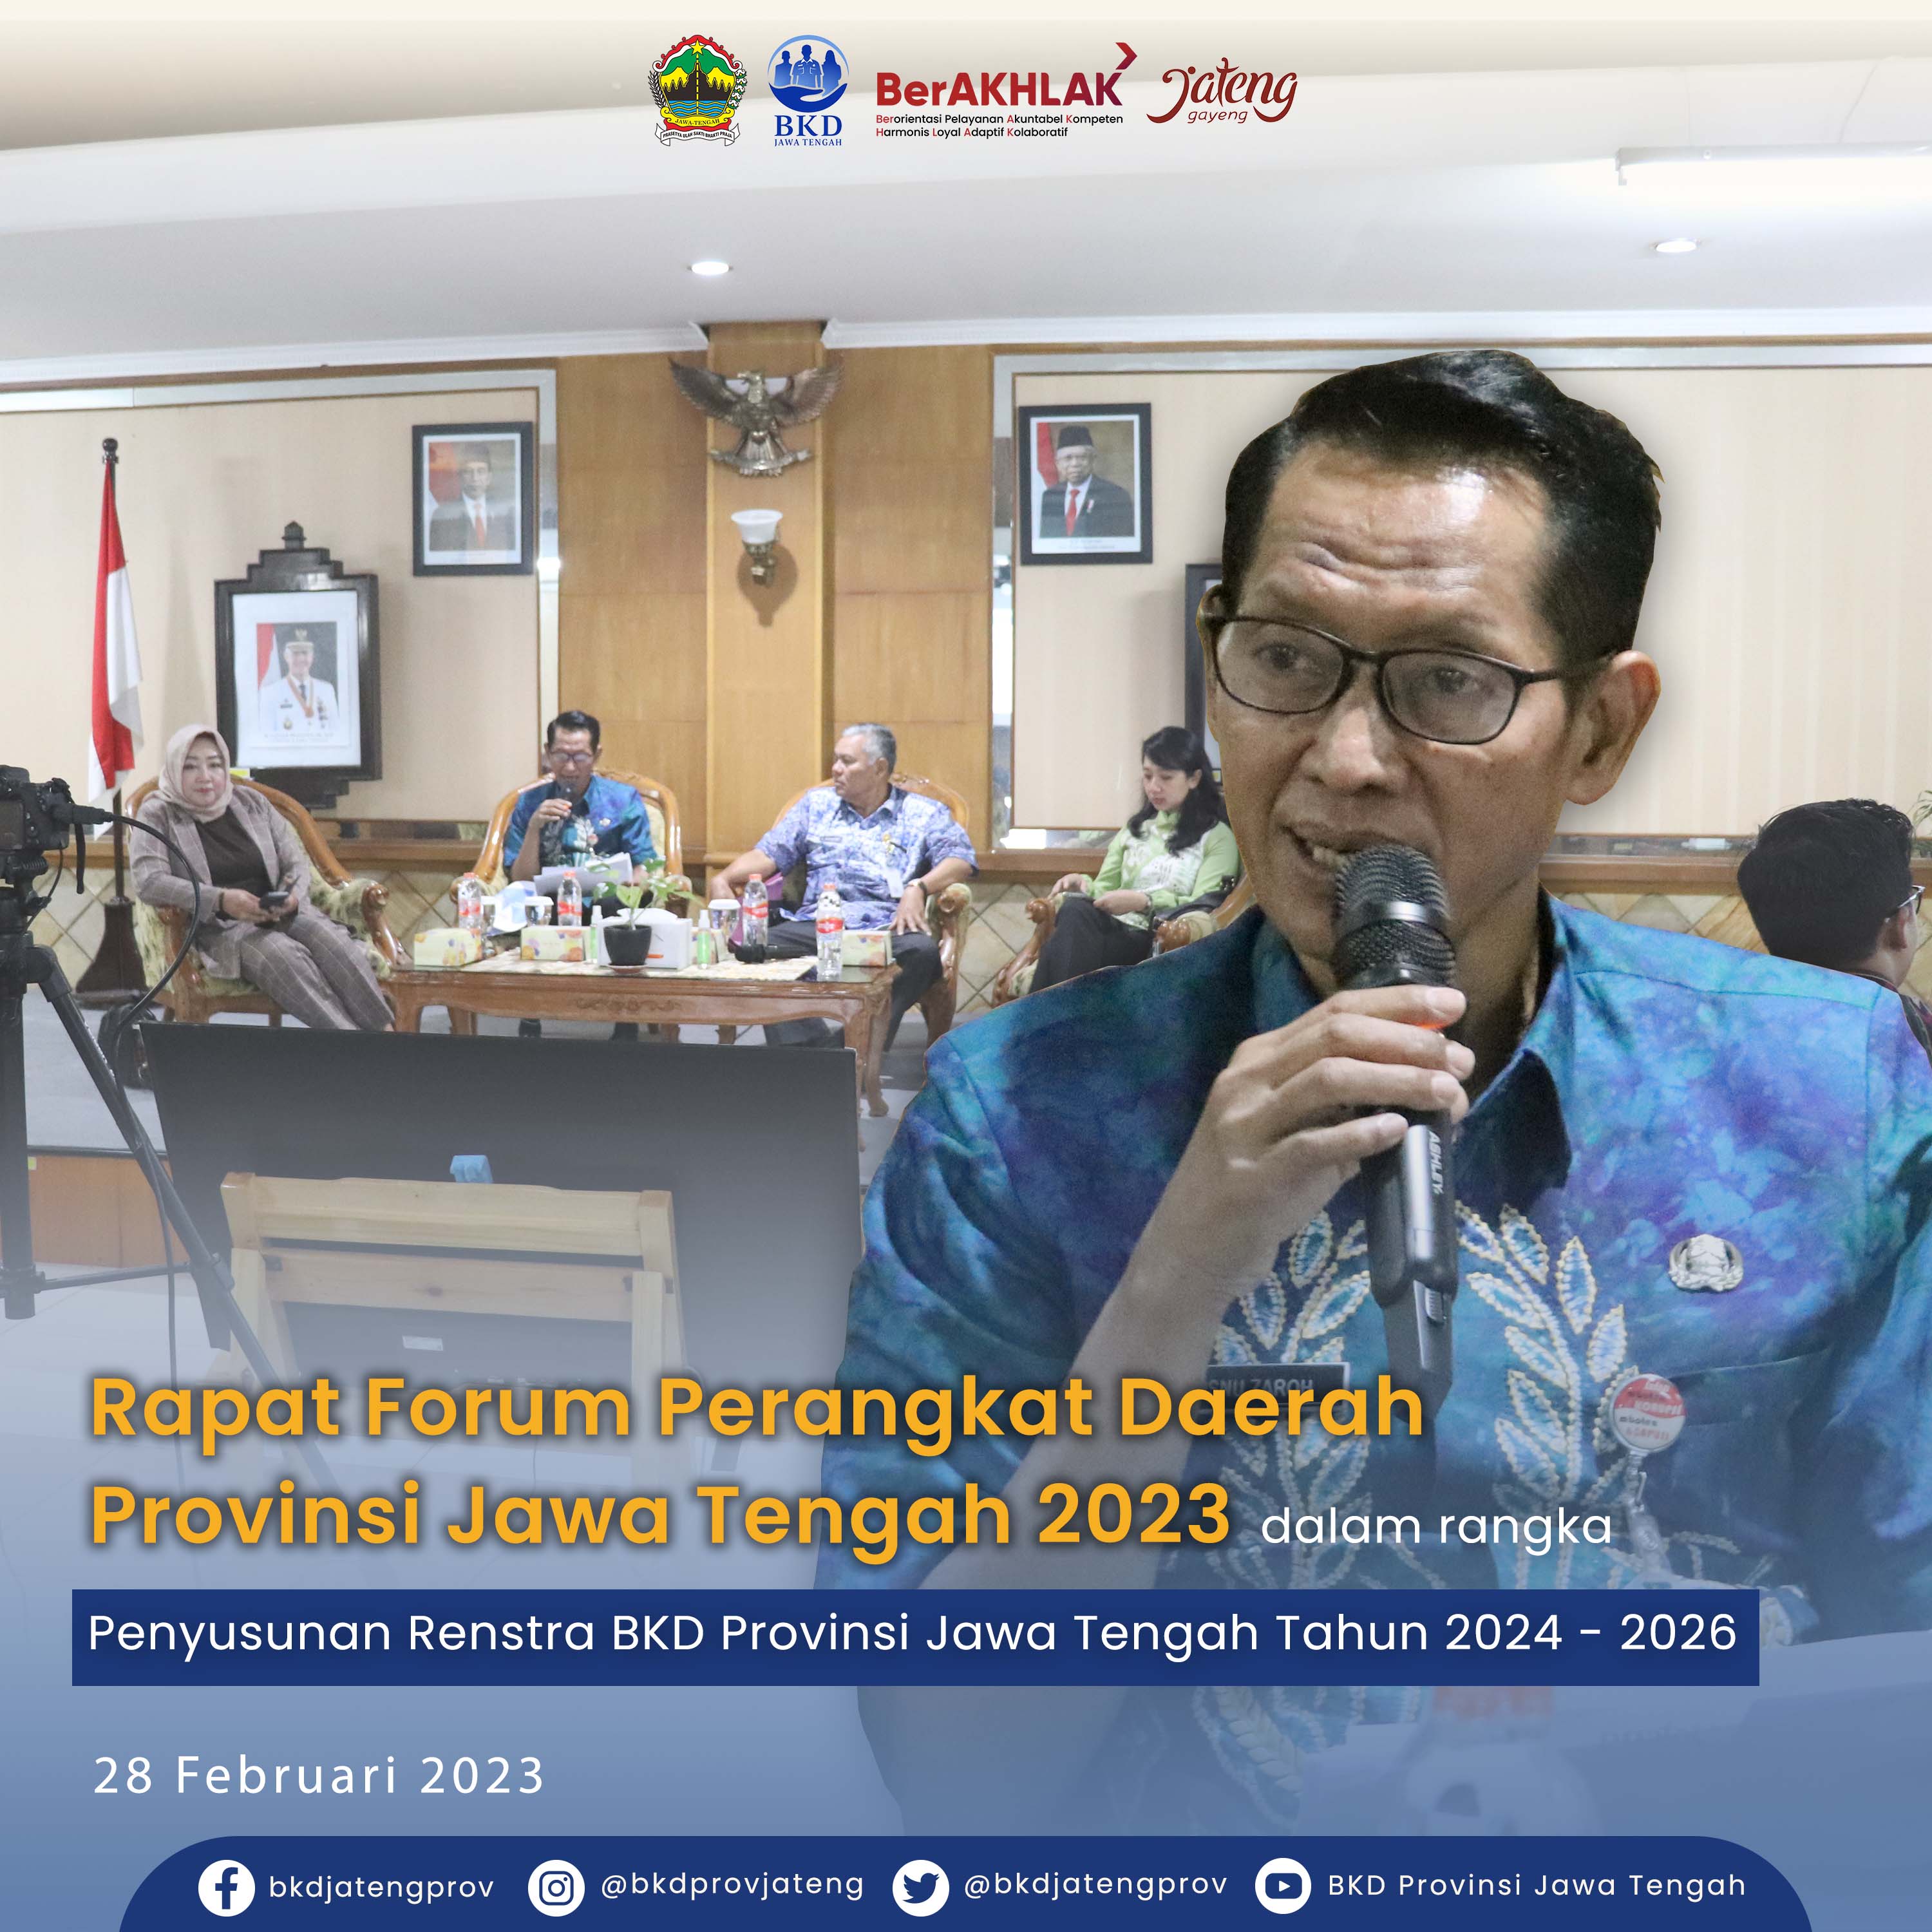 Rapat Forum Perangkat Daerah Provinsi Jawa Tengah Tahun 2023 Dalam Rangka Penyusunan Renstra BKD Provinsi Jawa Tengah Tahun 2024-2026